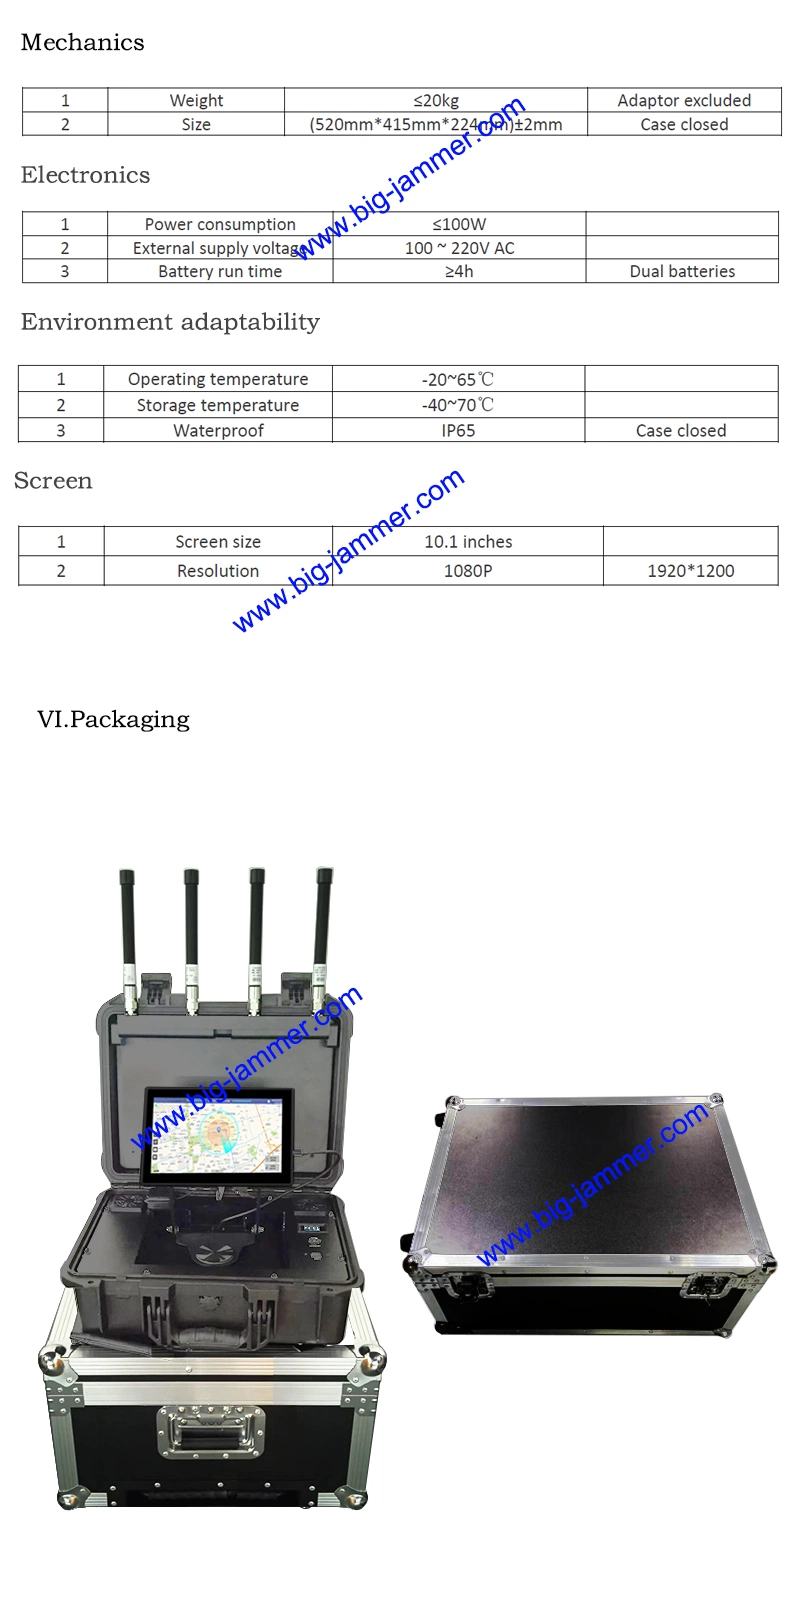 Lh-Y1001b (1-10km) Portable Uav Drone and Remote (pilots) Control Locate Track Detector